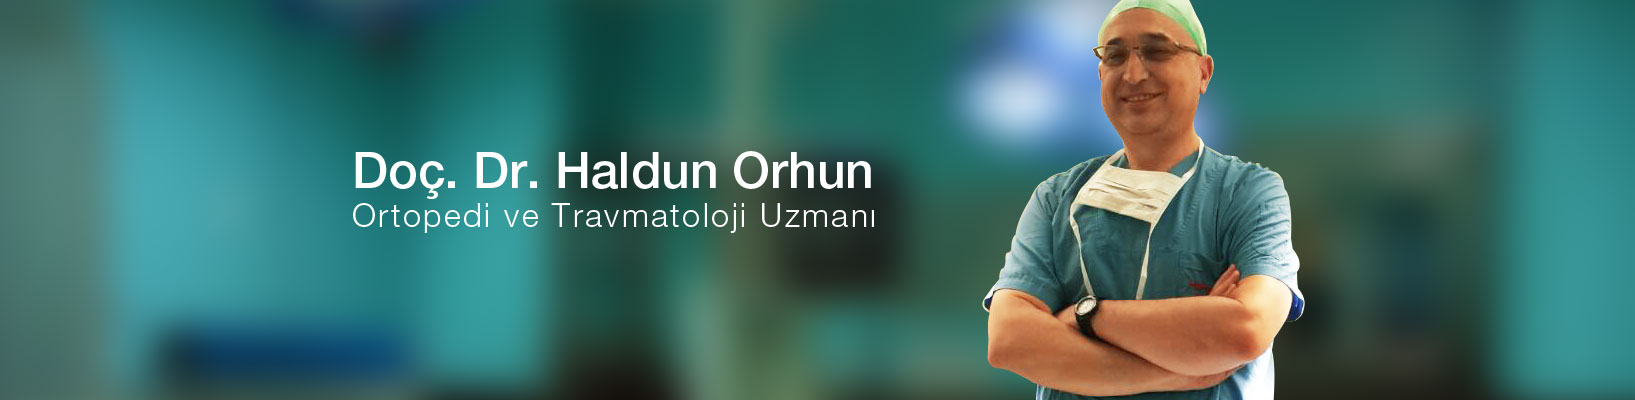 Dr. Haldun Orhun